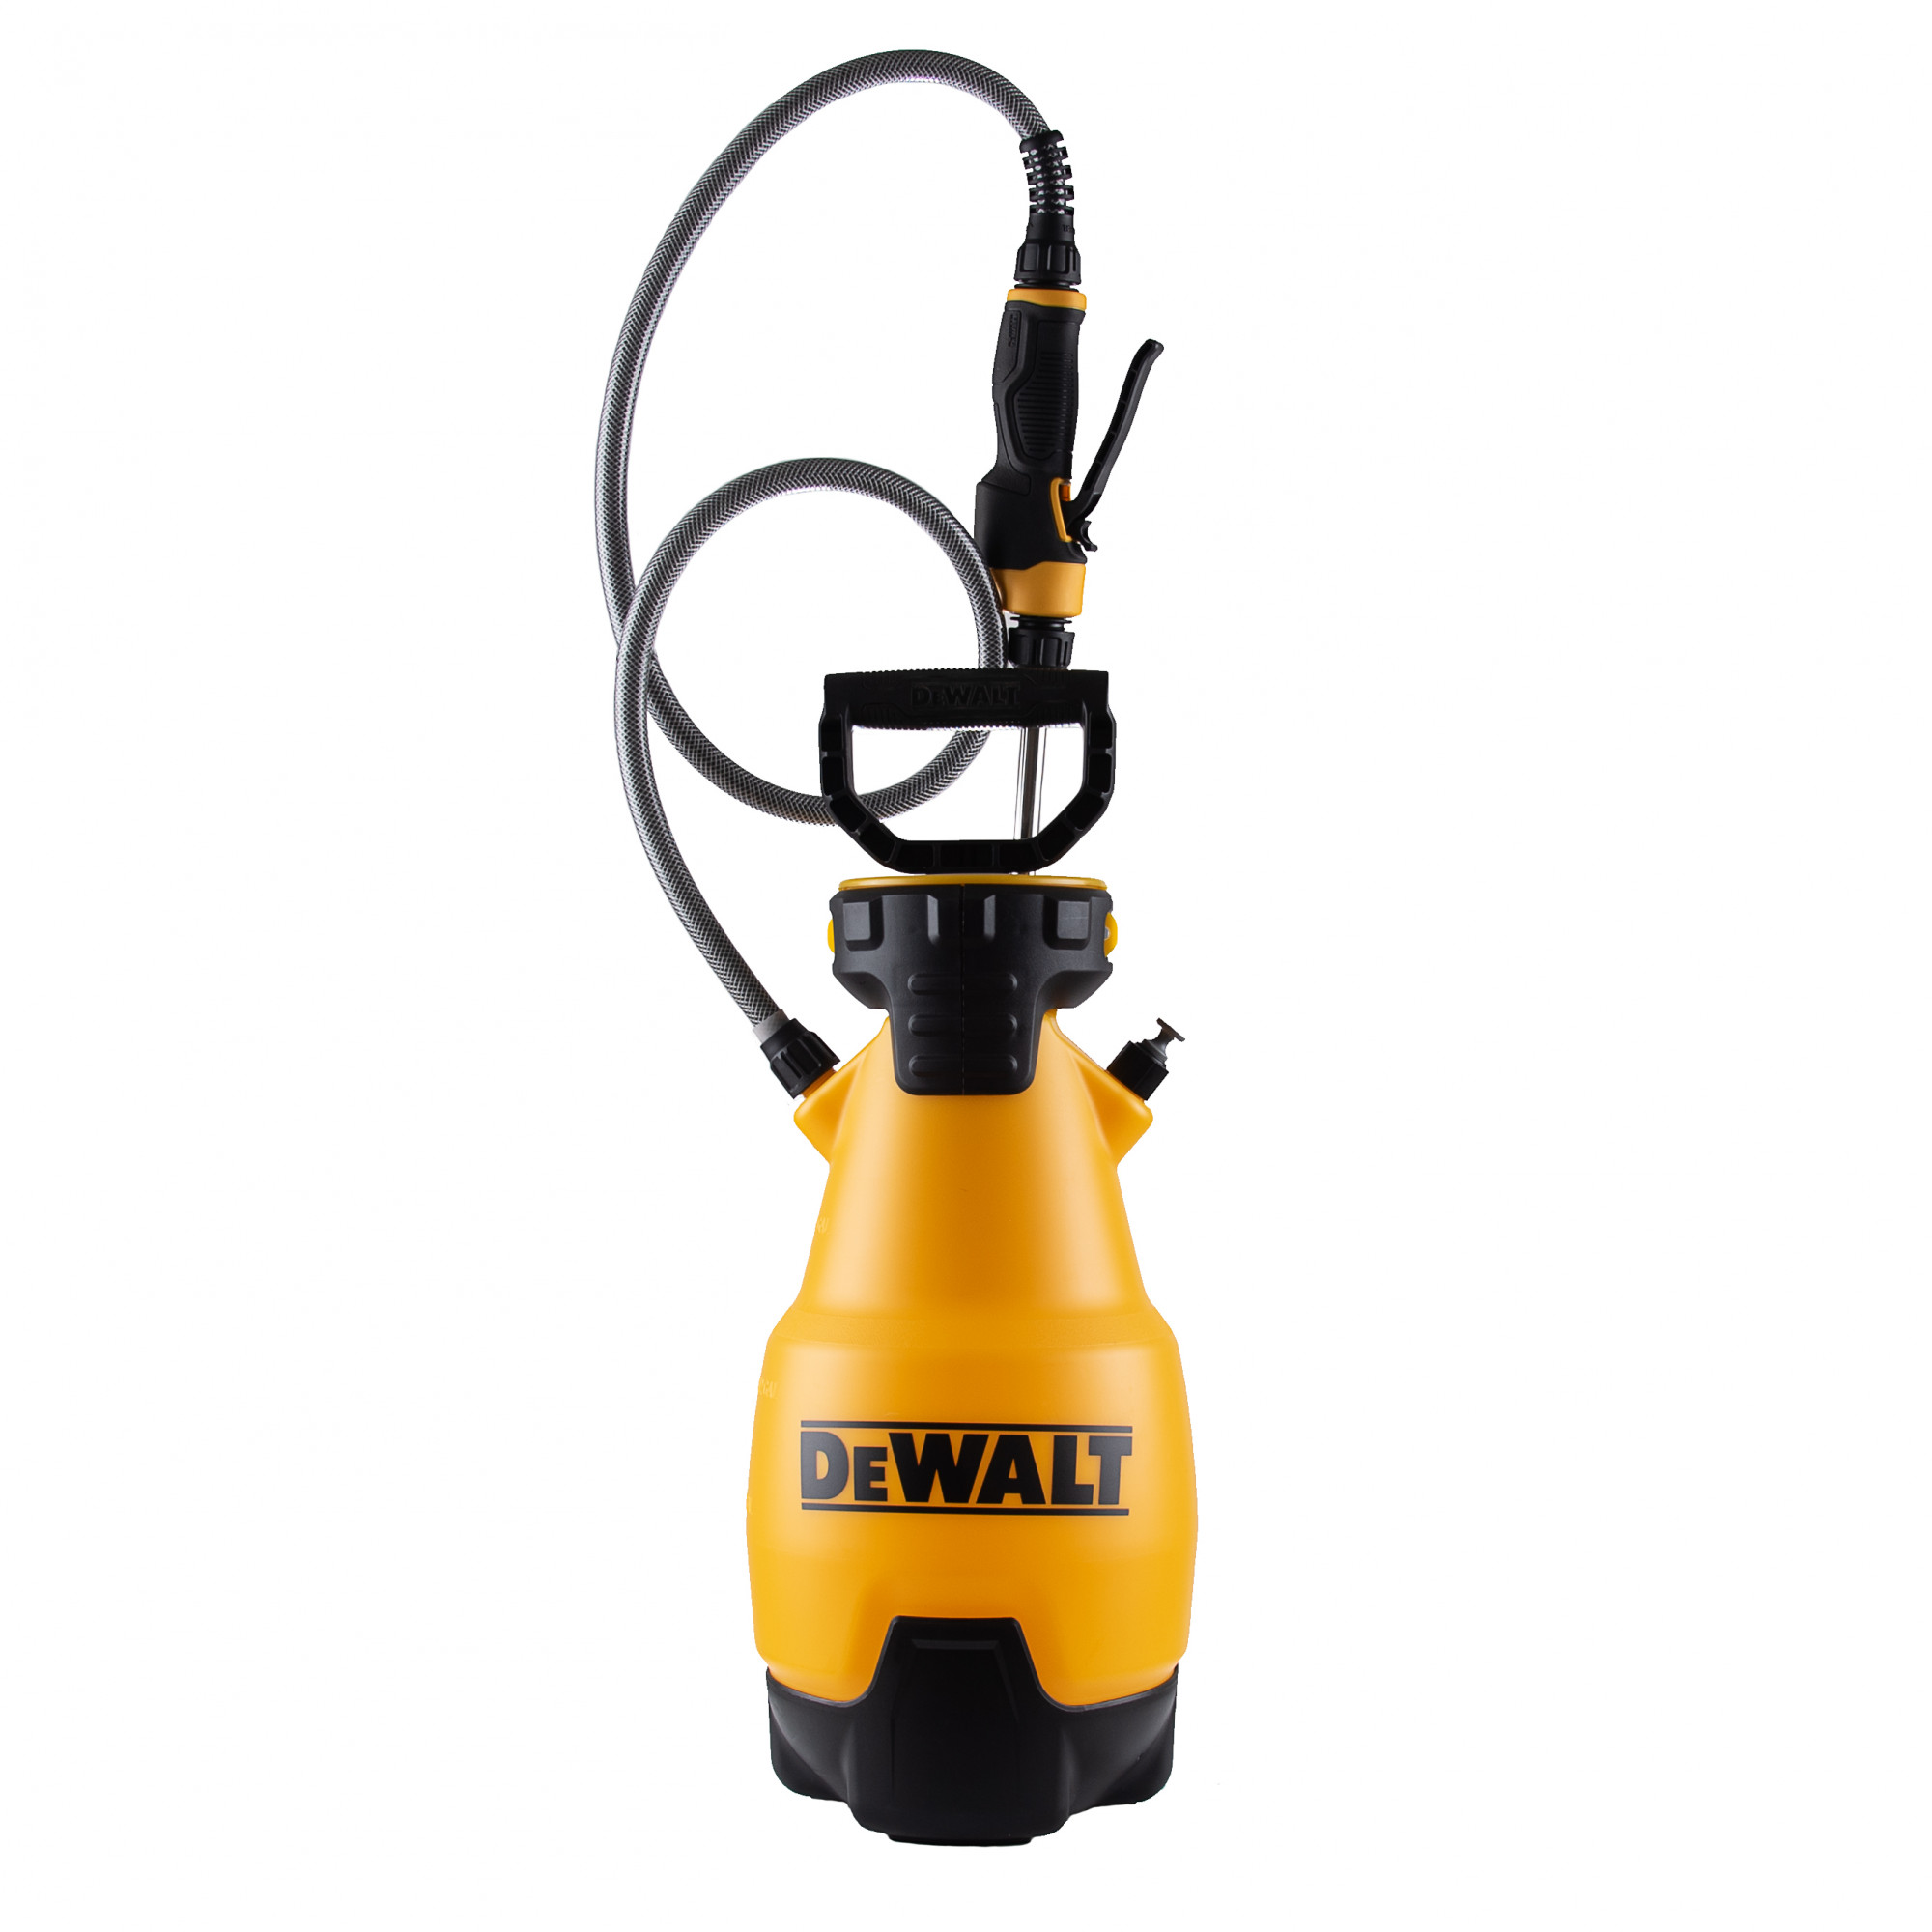 DEWALT® 2 Gallon Professional Sprayer, Model DXSP190612